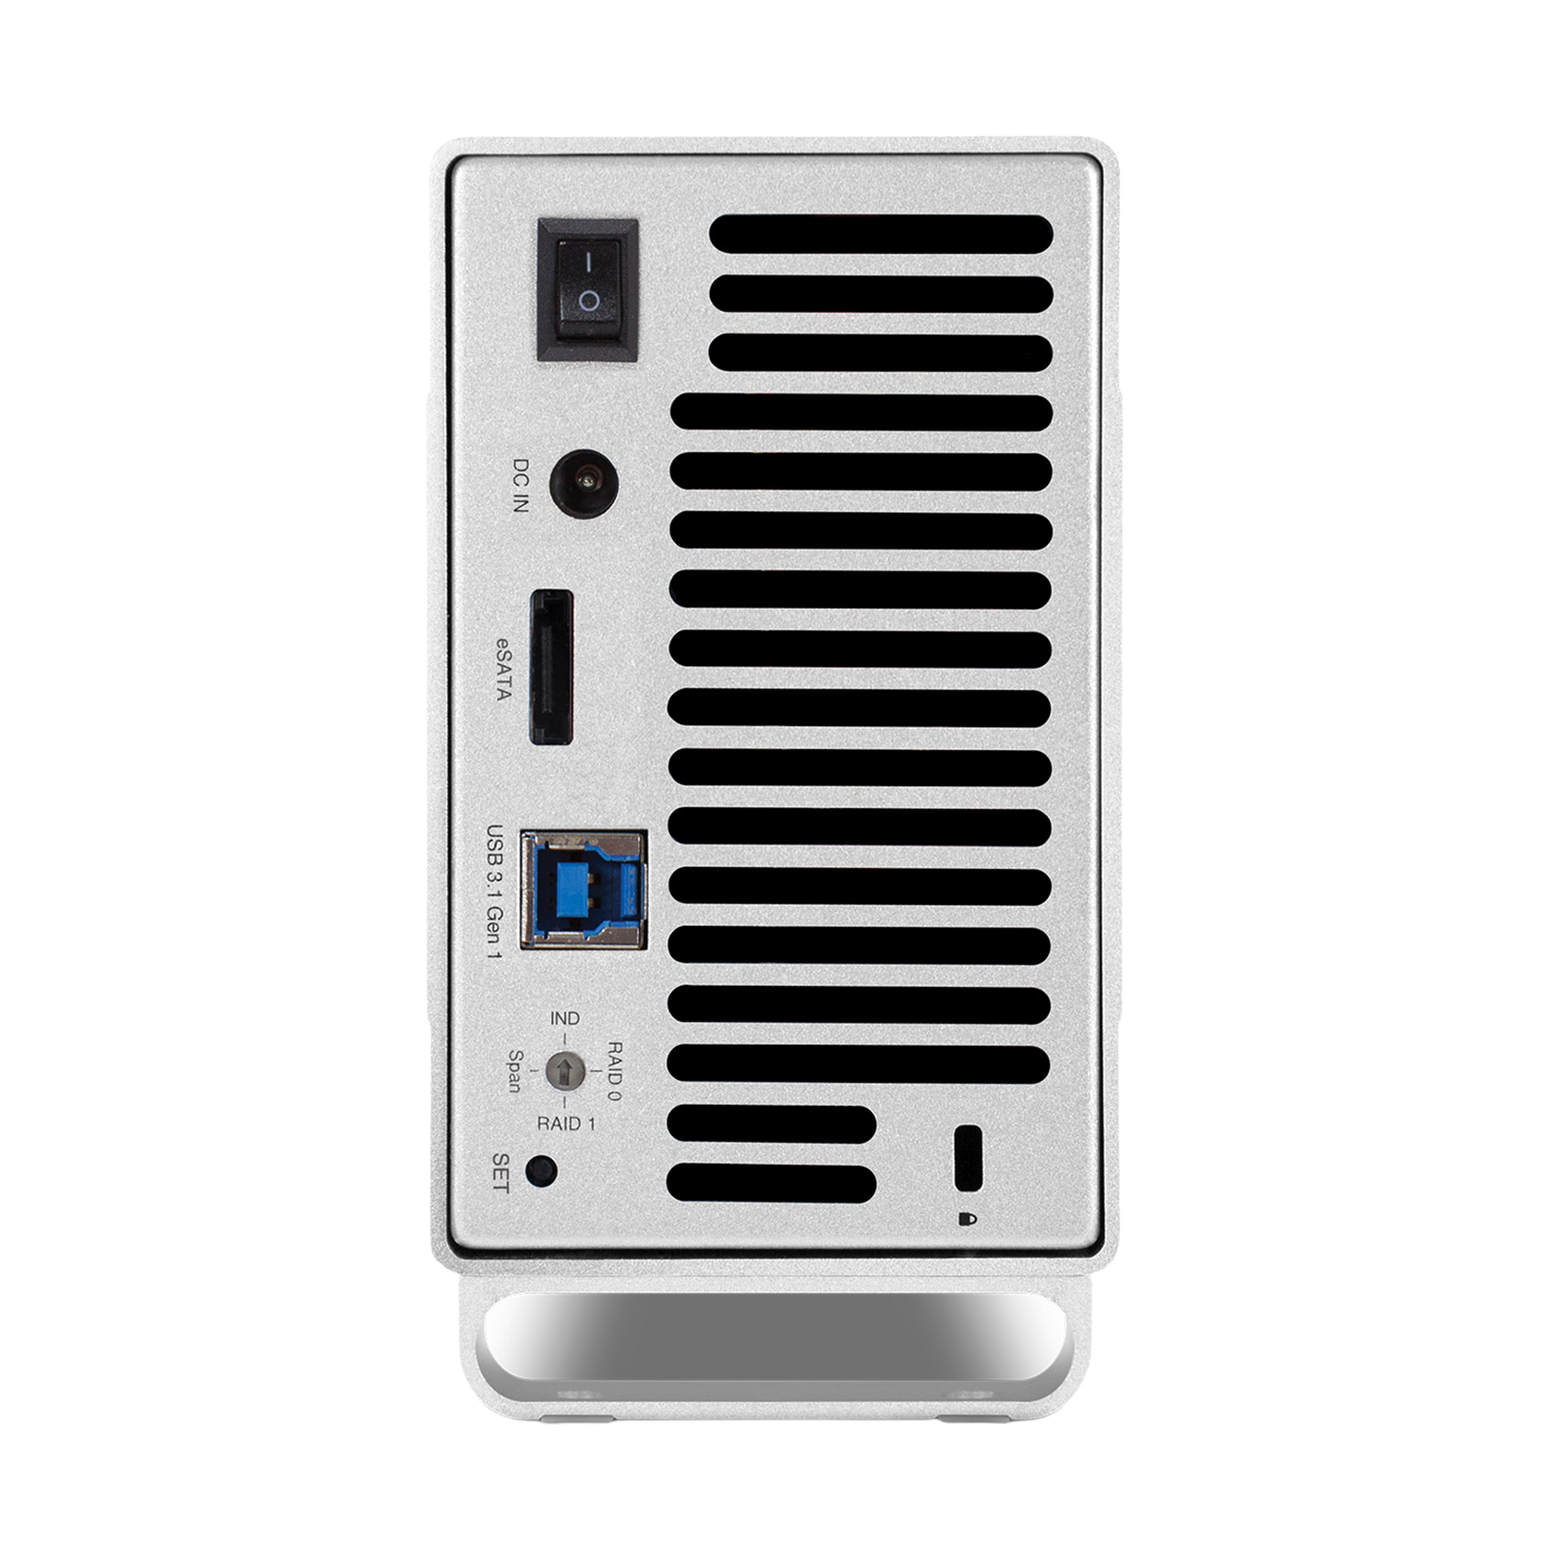 OWC Mercury Elite Pro Dual 3.5" RAID Enclosure with USB 3.1 & eSATA Ports